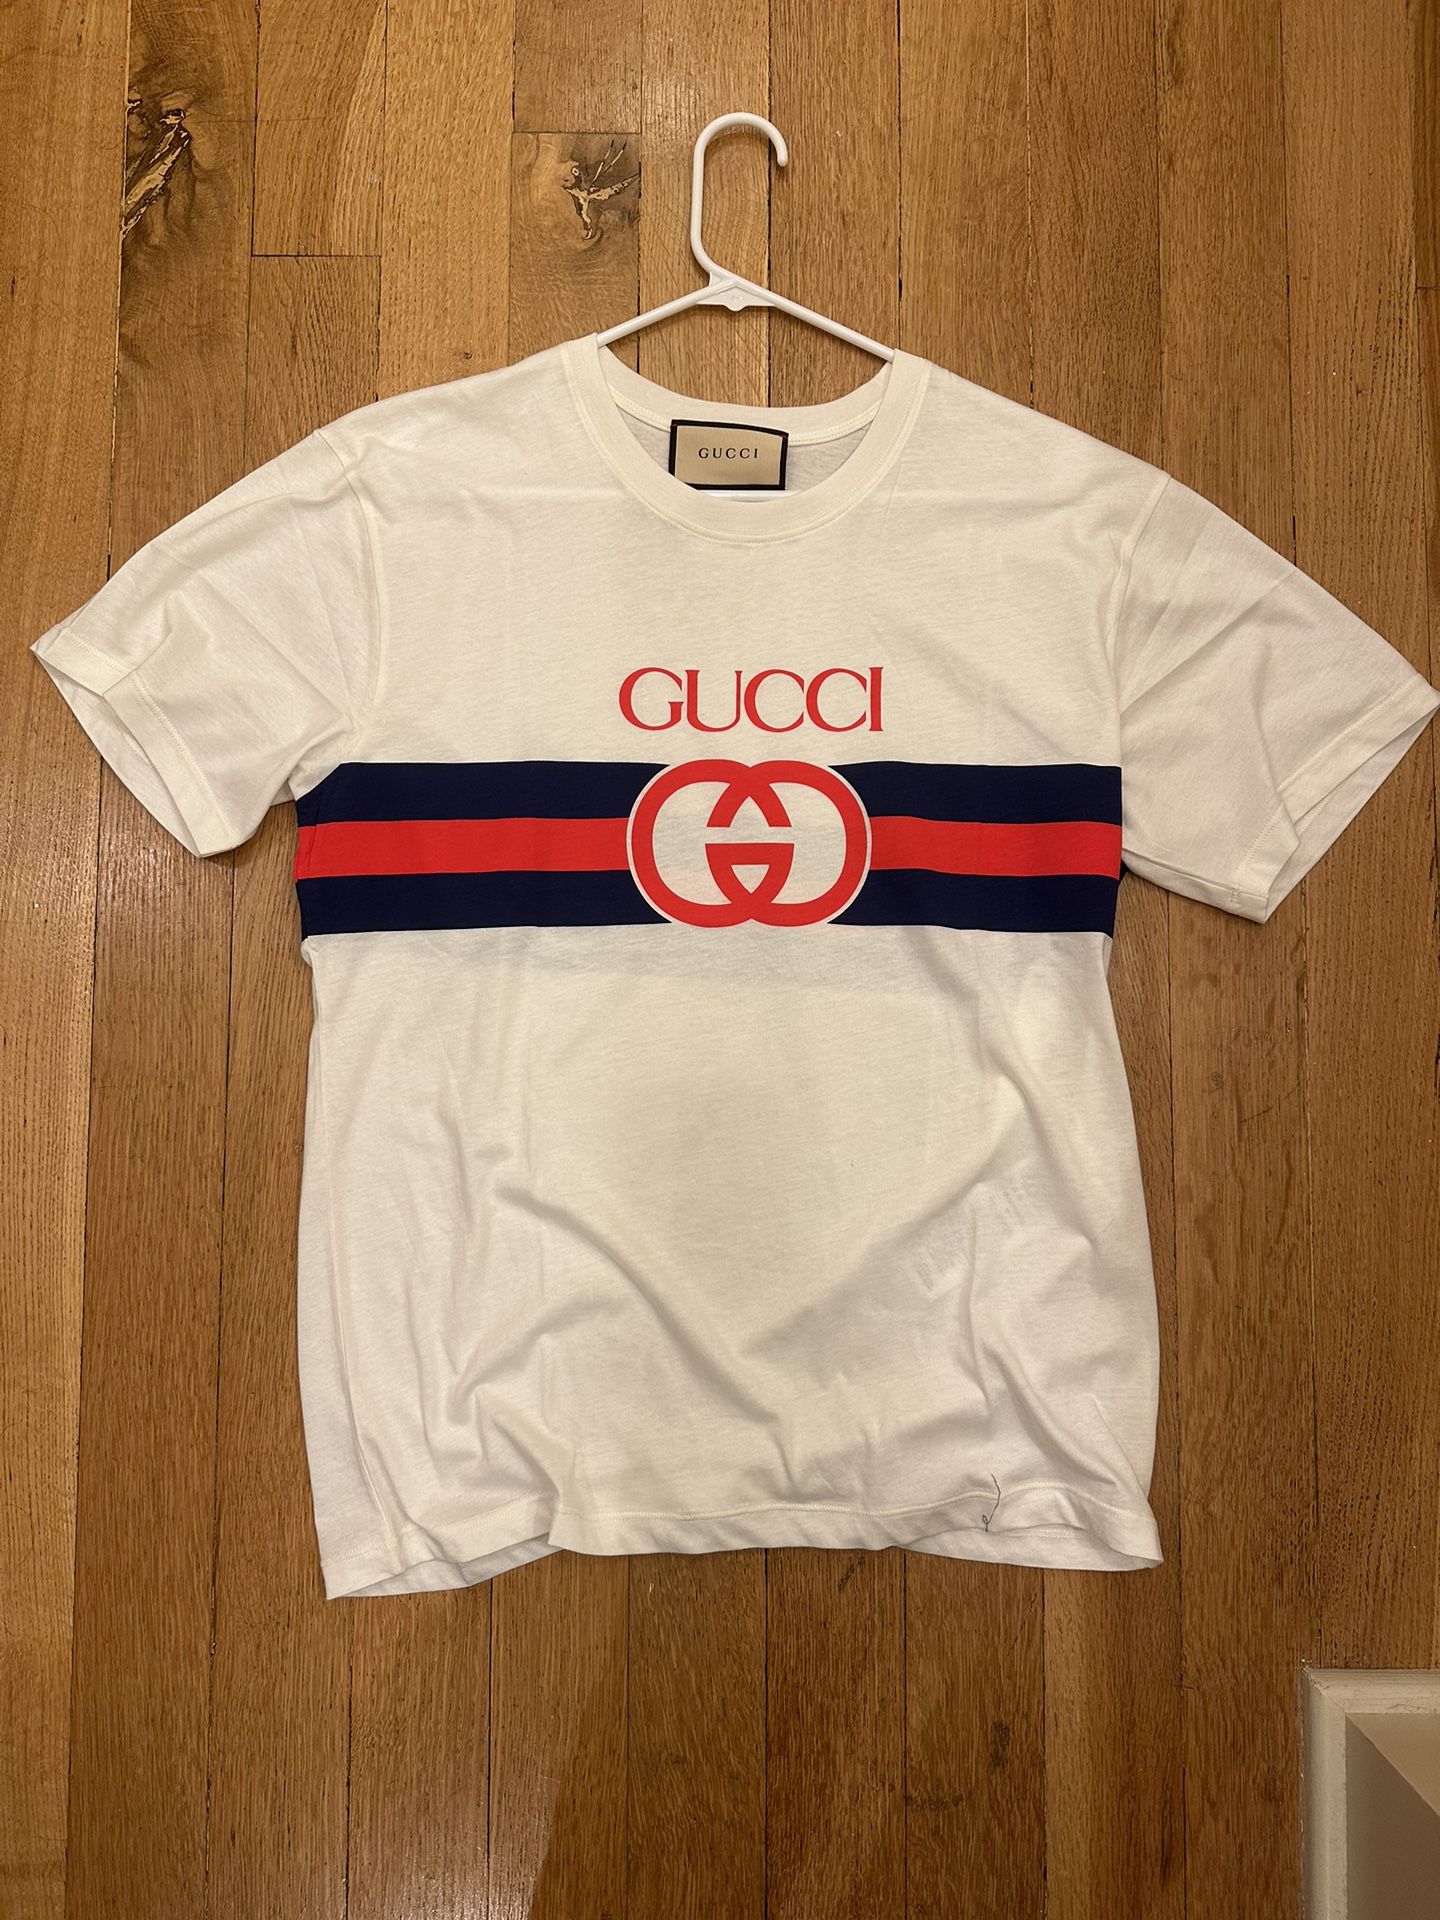 Gucci Stripe T-Shirt - Size Small